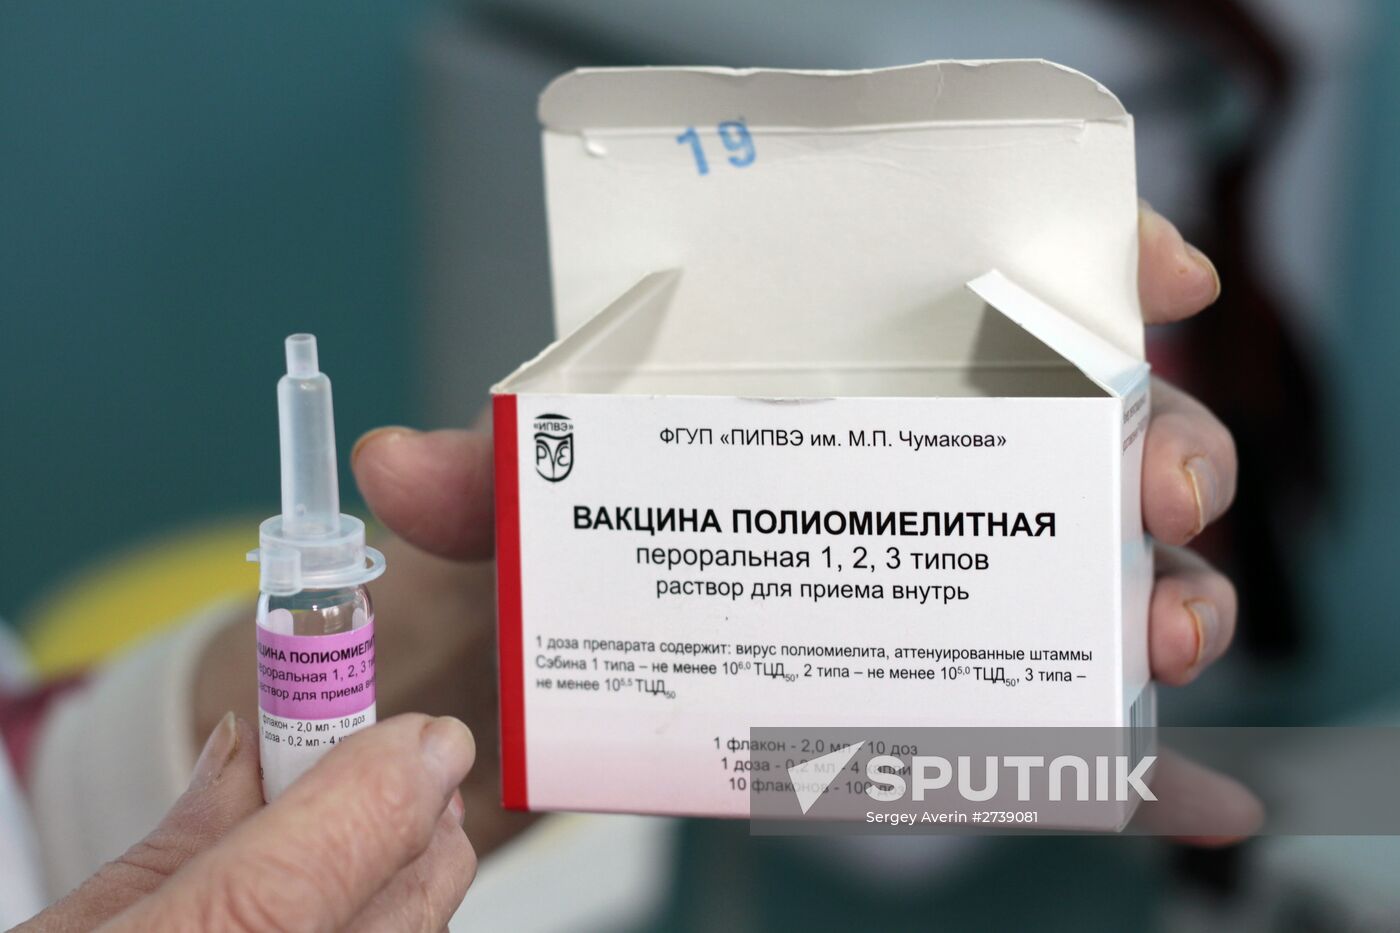 Children vaccinated in Donetsk against polio